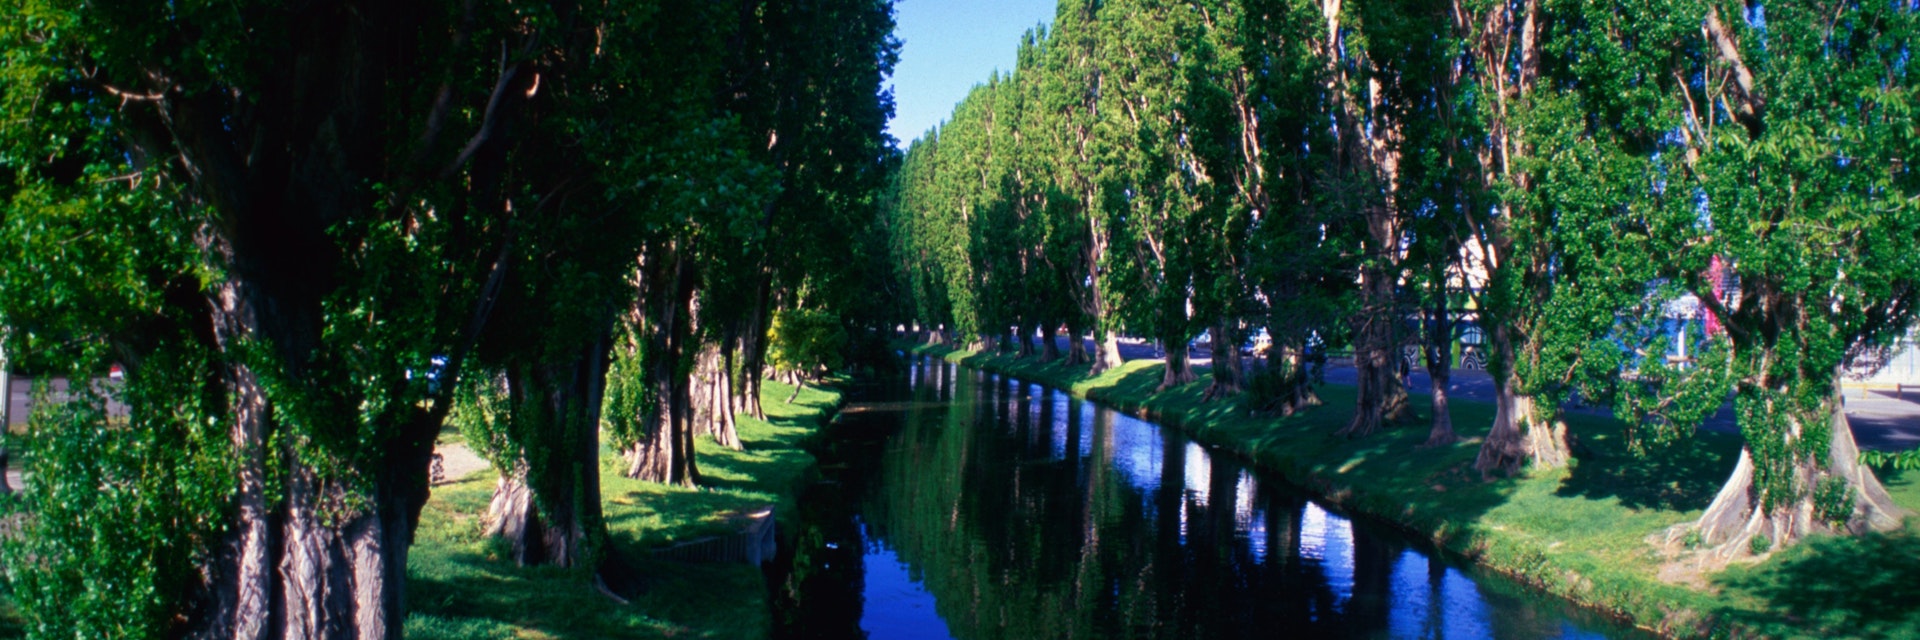 The River Avon in Christchurch.